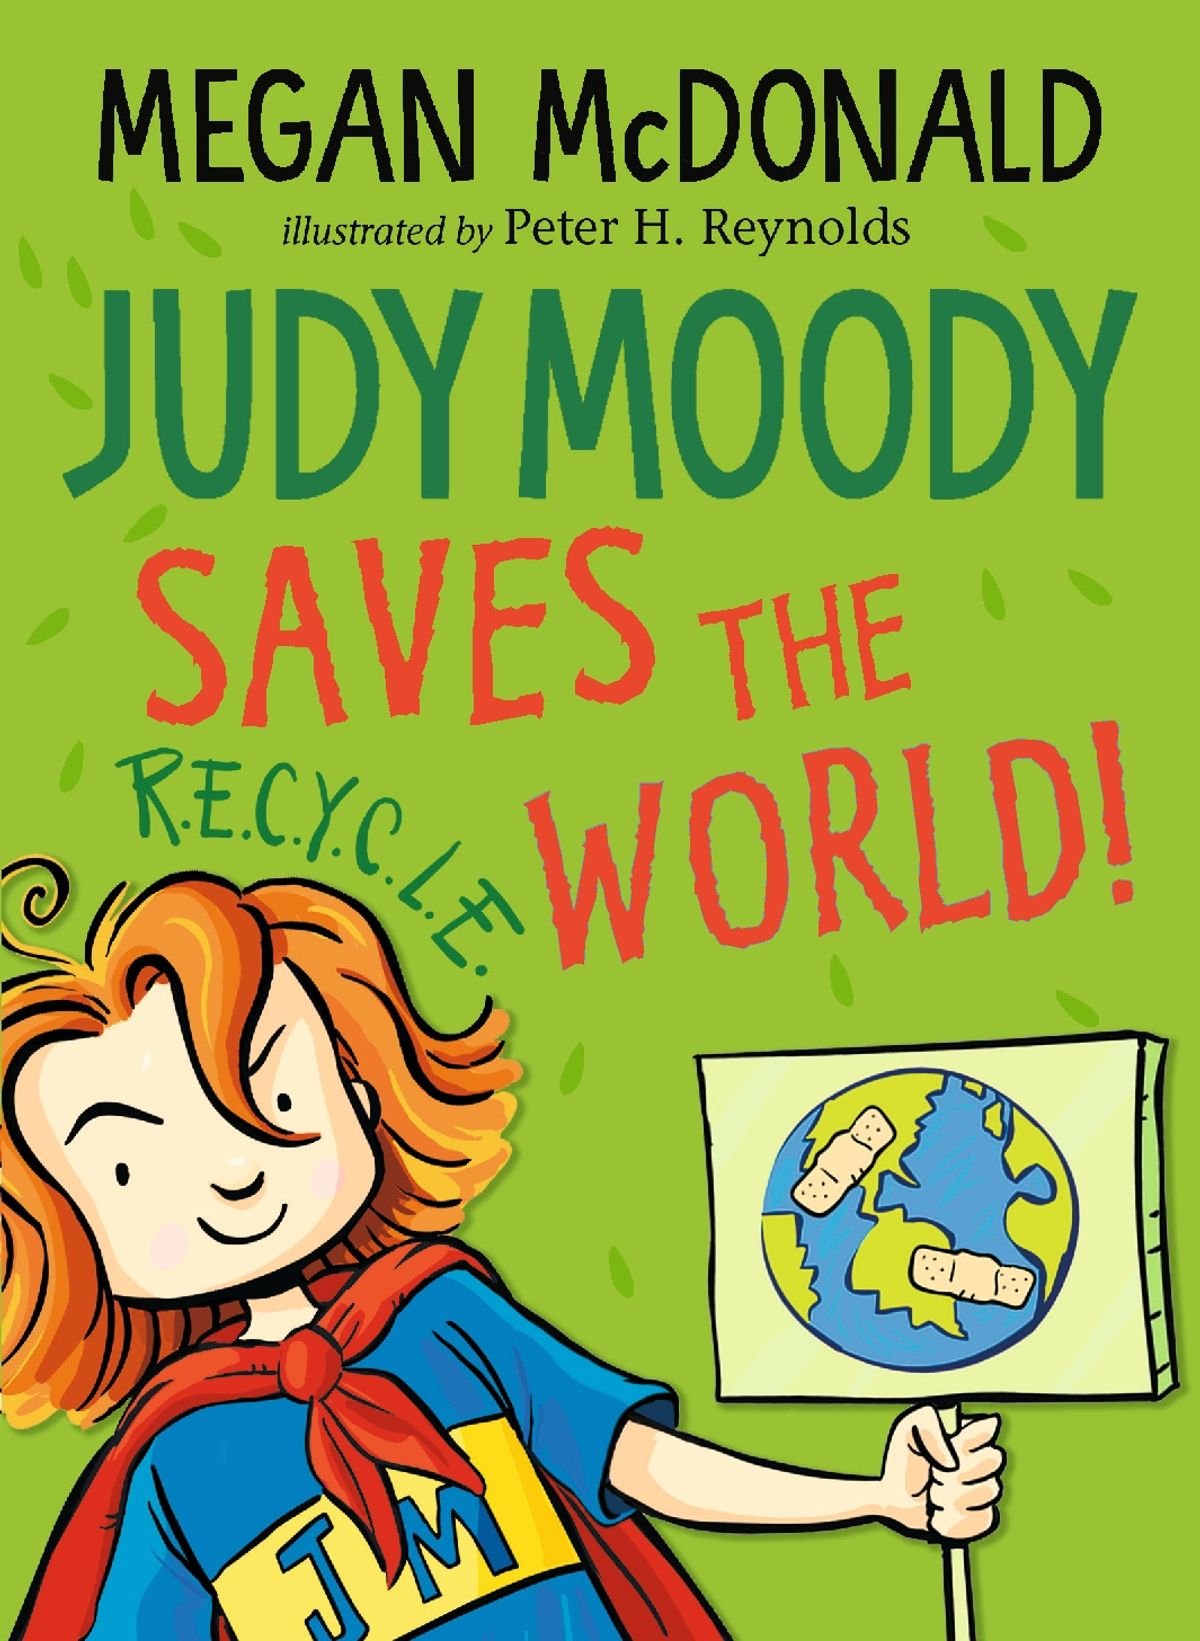 Judy Moody #3 Saves the World!